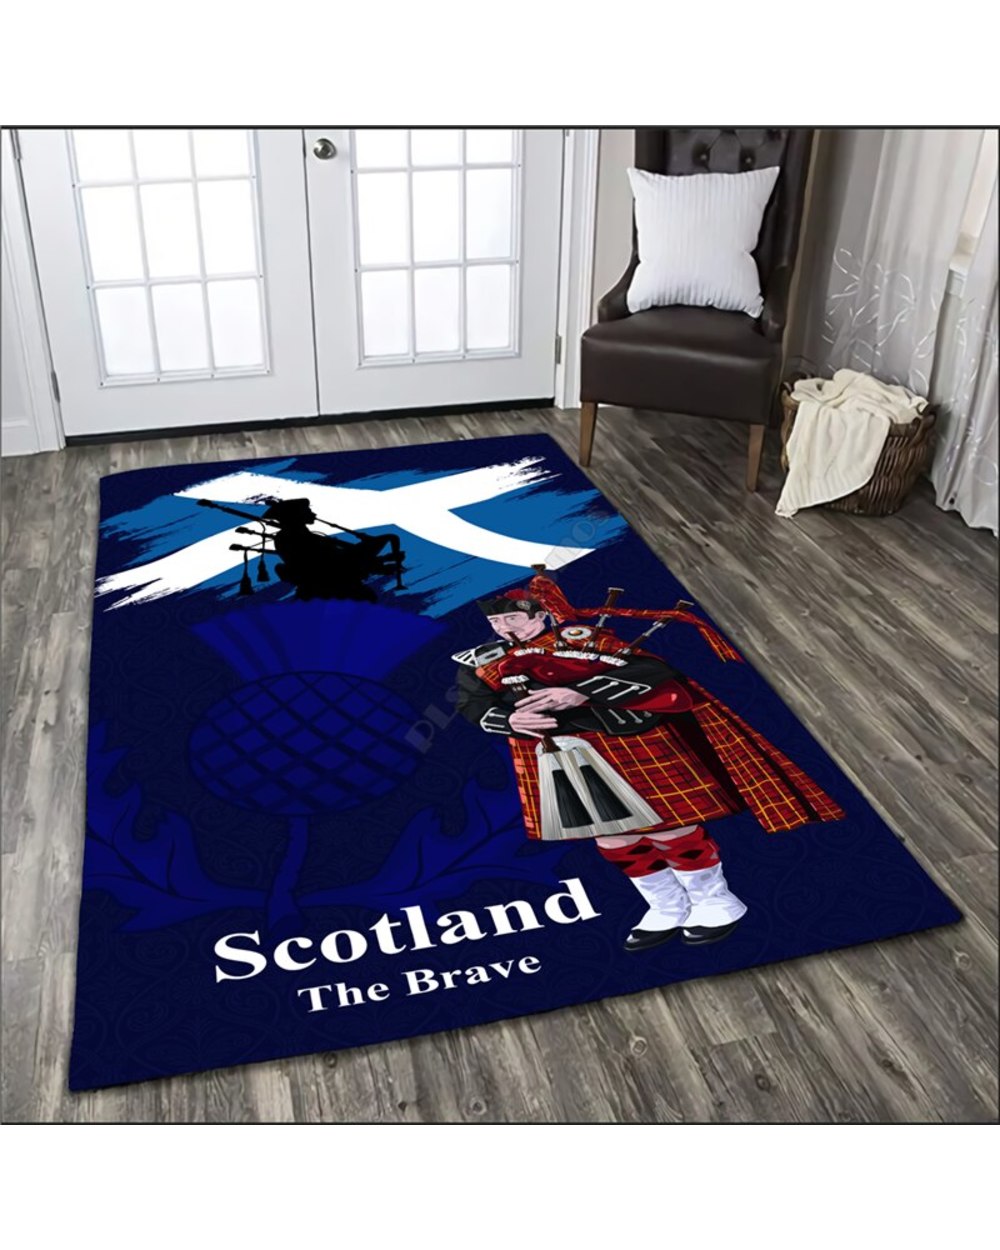 Scotland the brave man rug 8